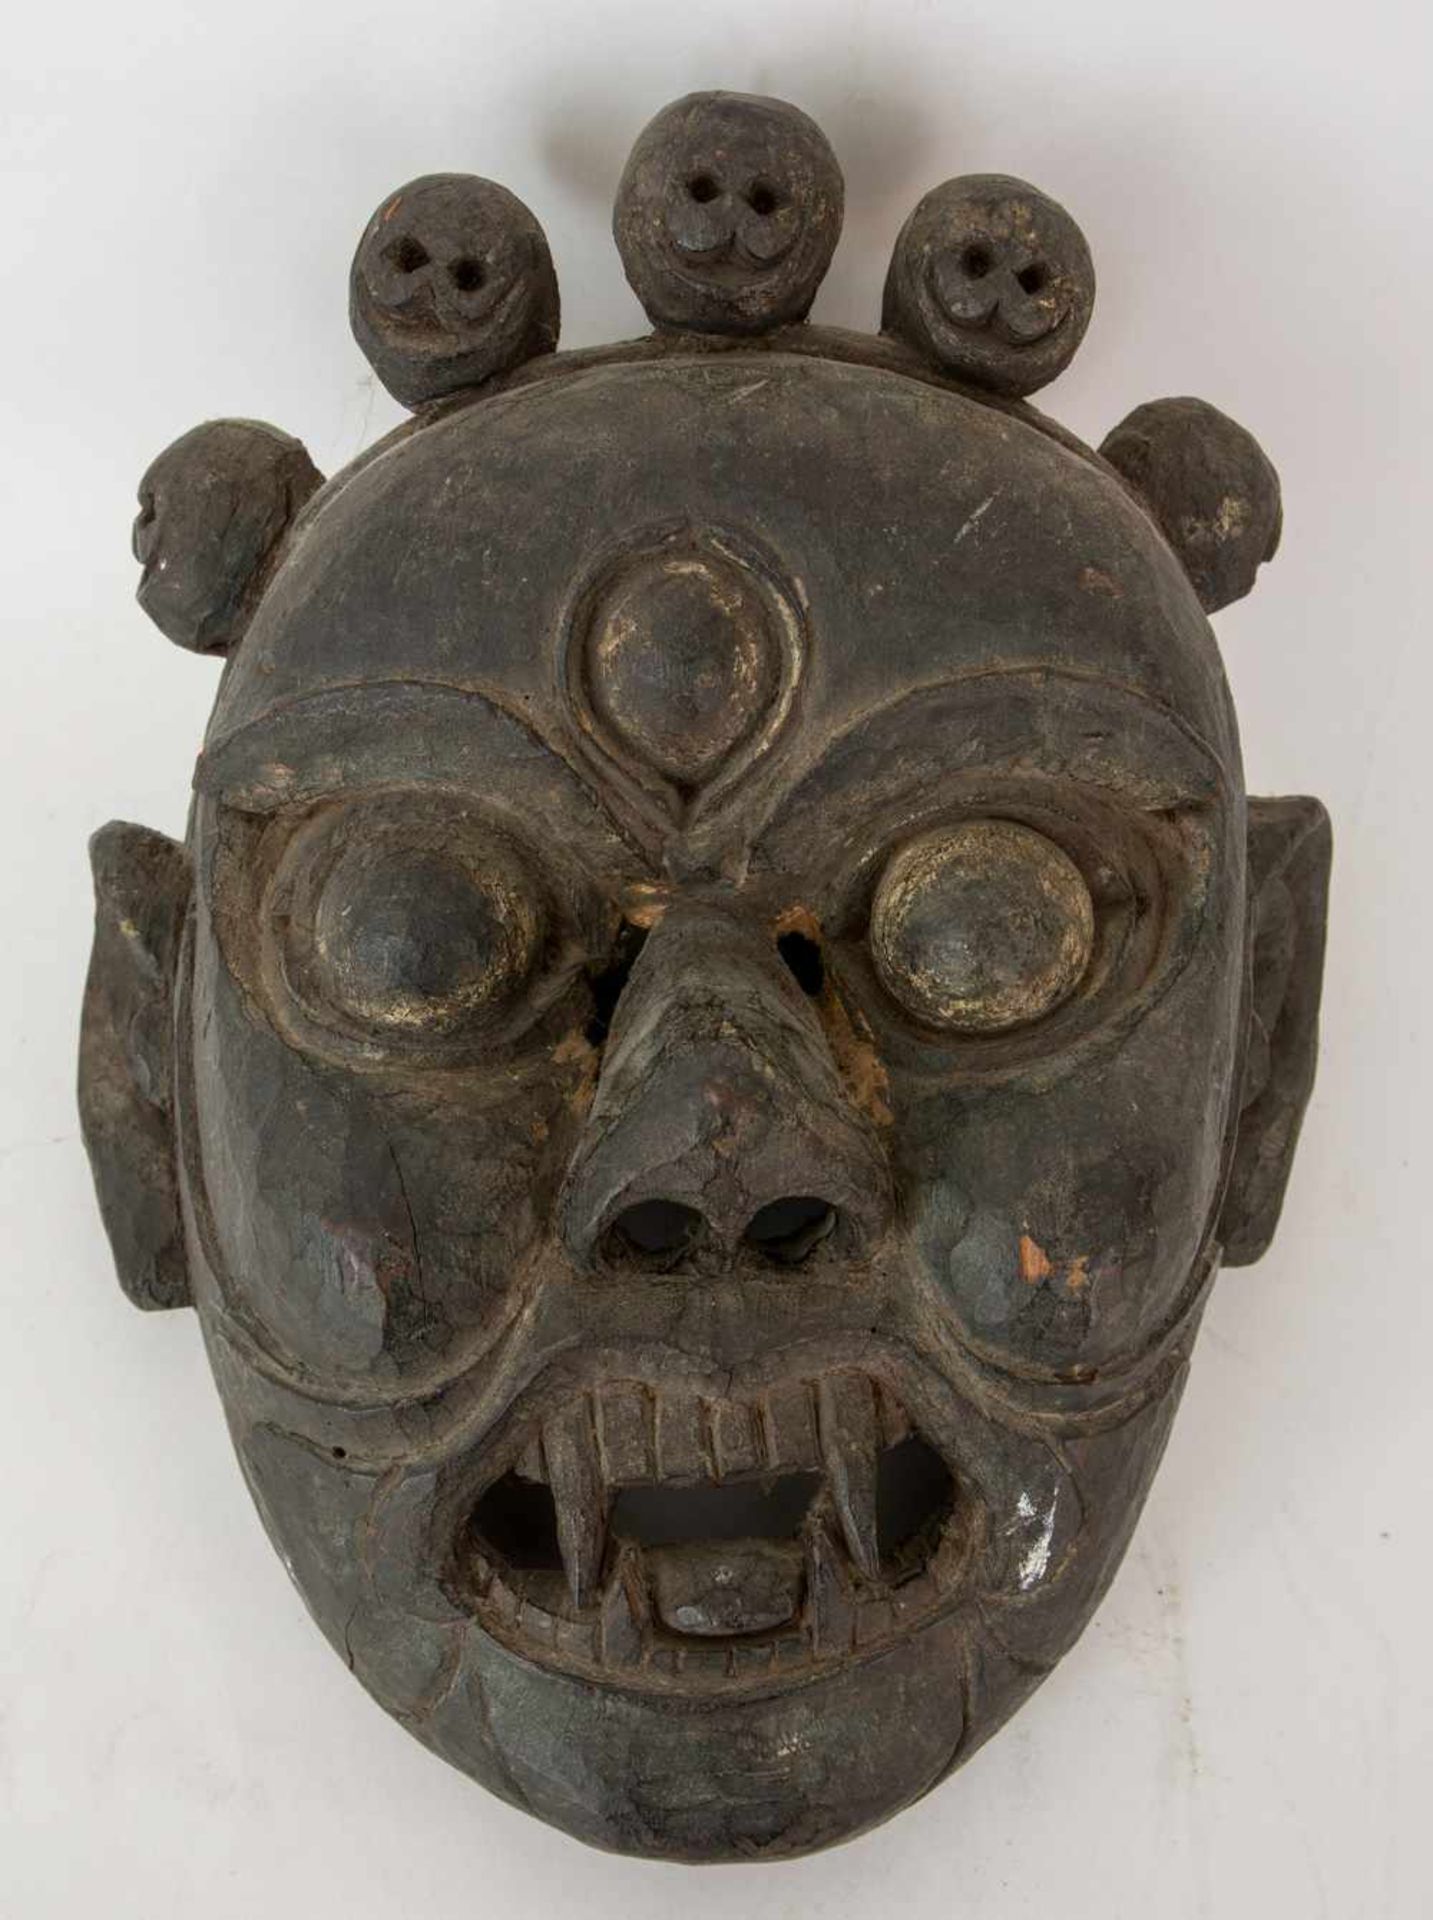 MASKE eines Dämons, beschnitztes Holz, Nepal 19. Jahrhundert Aus Holz geschnitzte Maske eines Dämons